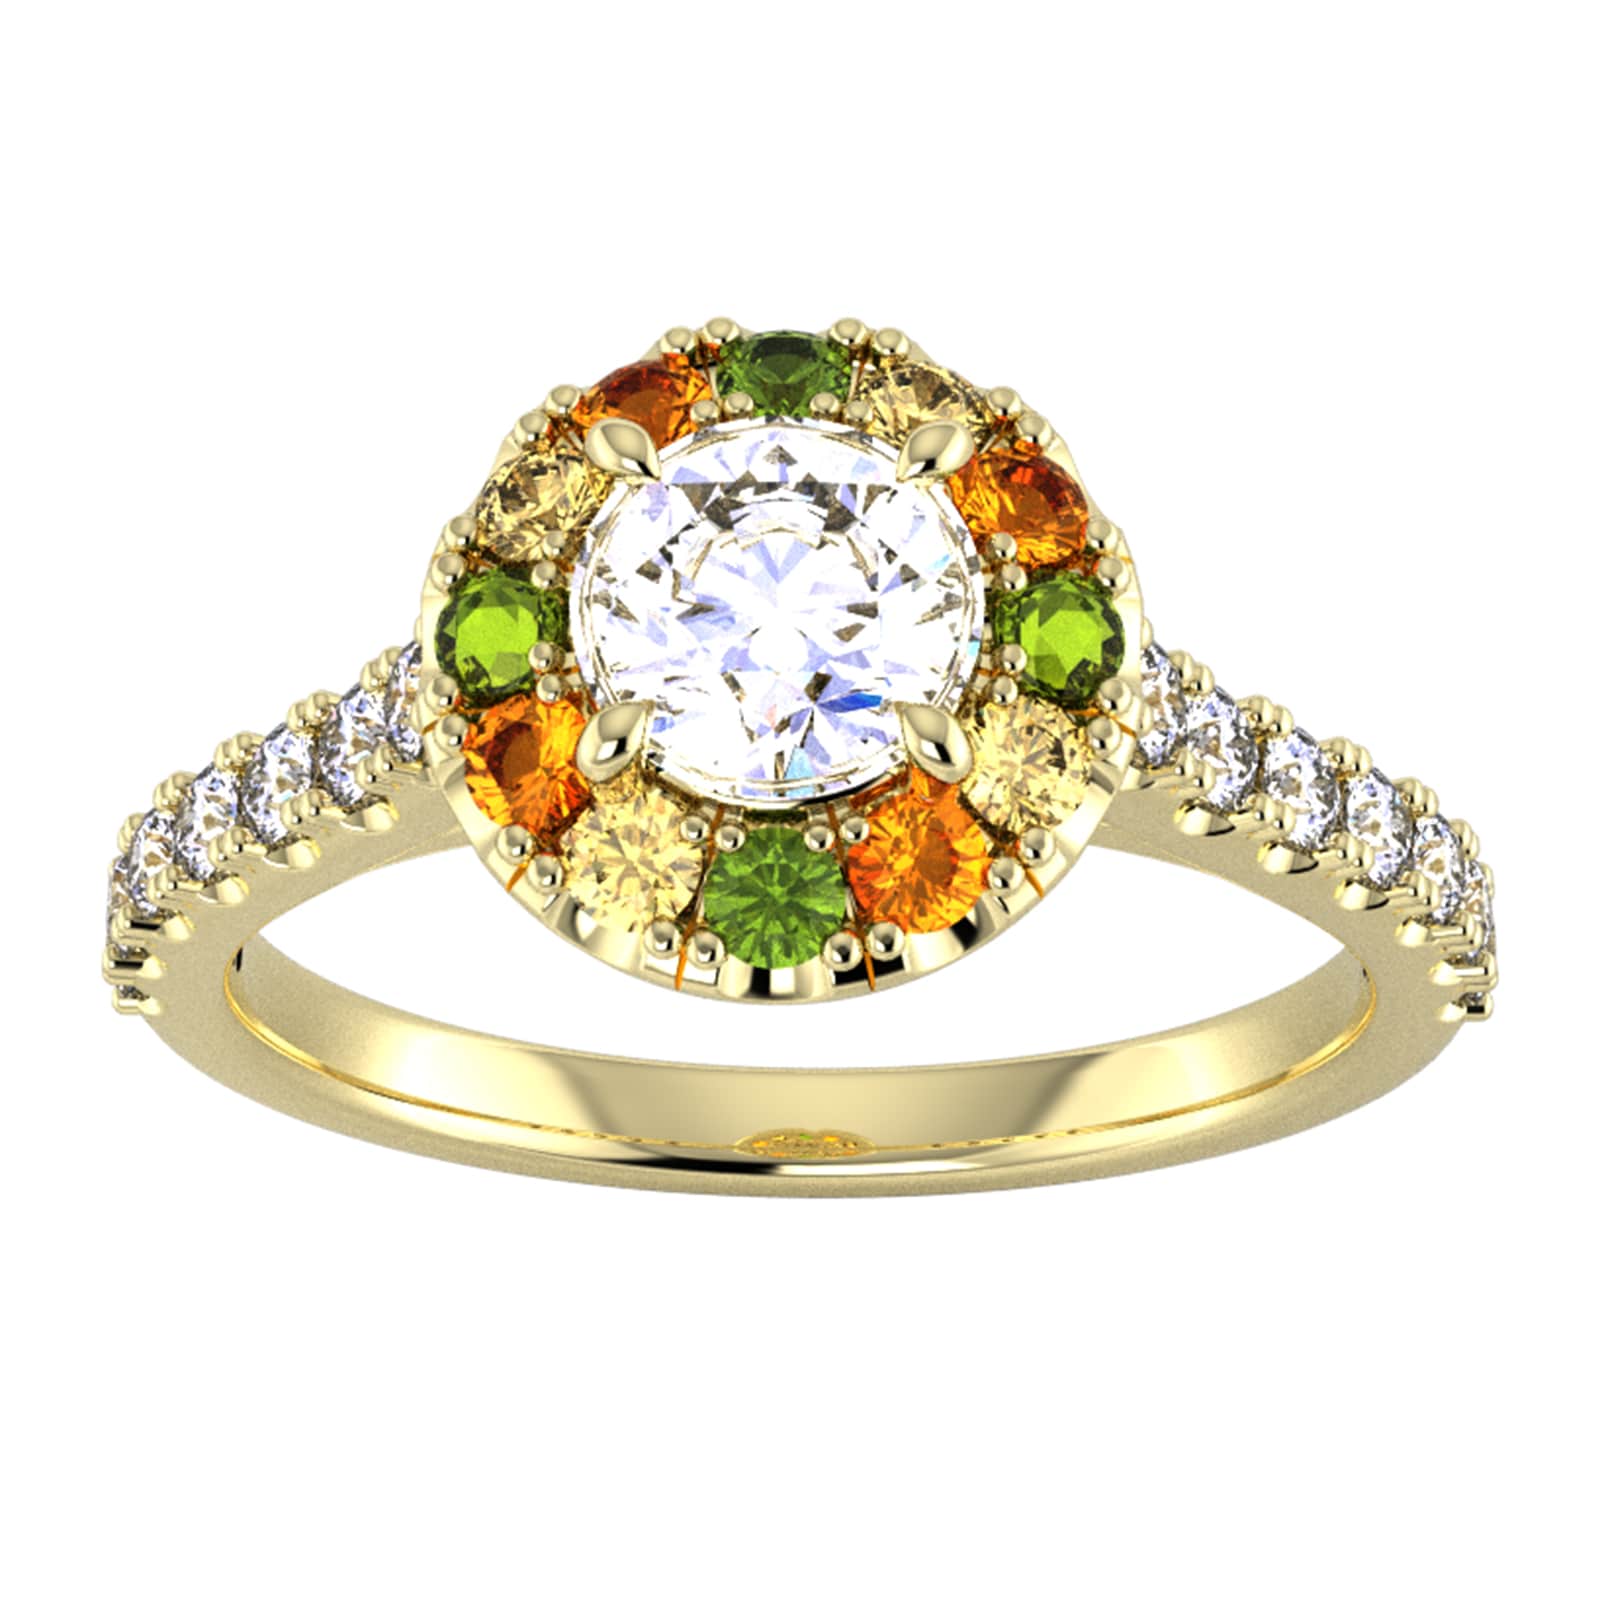 18ct Yellow Gold Diamond & Yellow, Orange, Green Sapphire Halo Ring - Ring Size Q.5